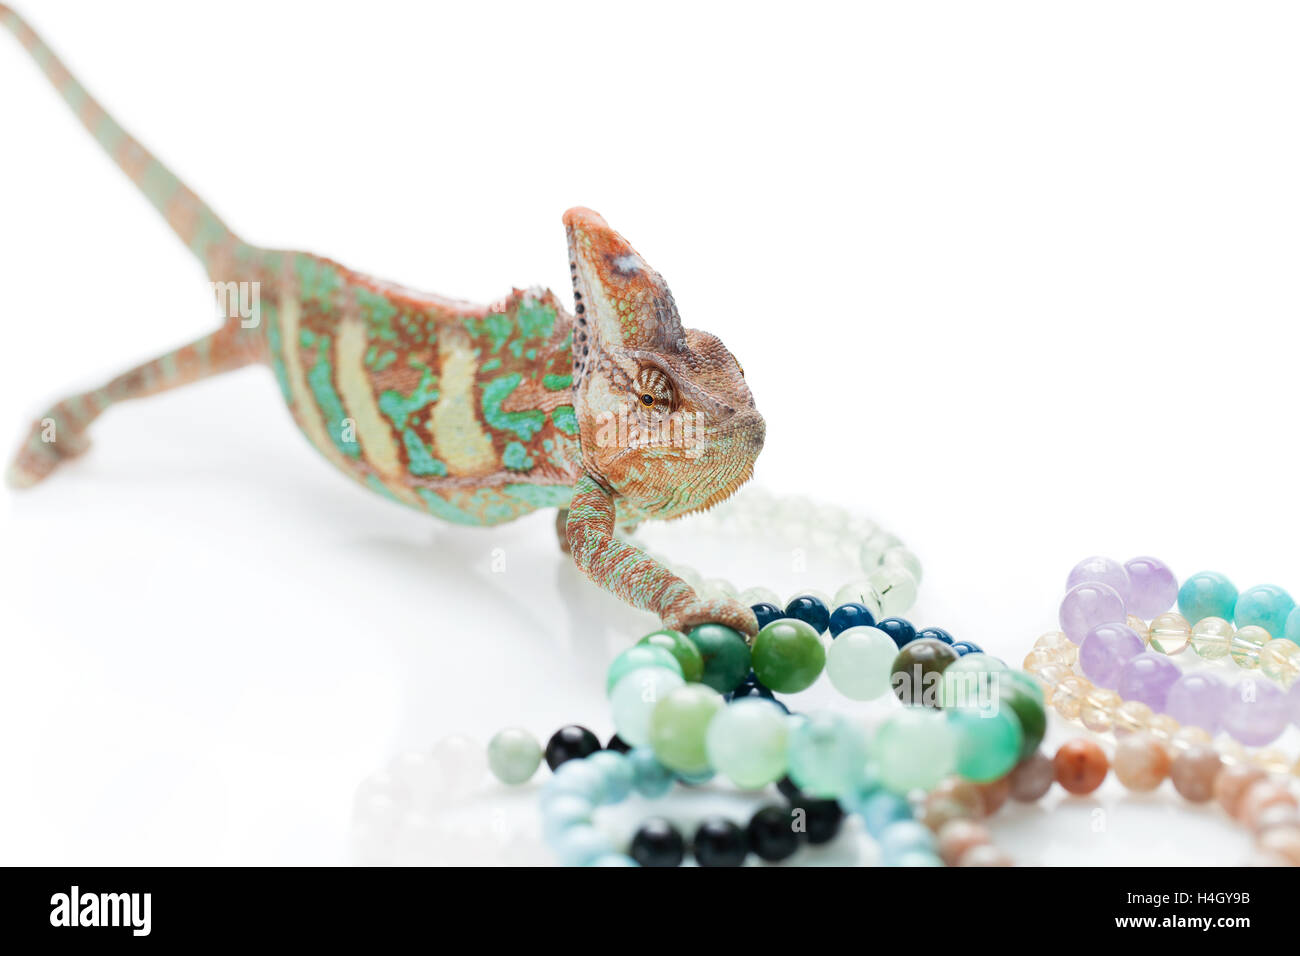 Beautiful chameleon with natural stone bracelets Stock Photo